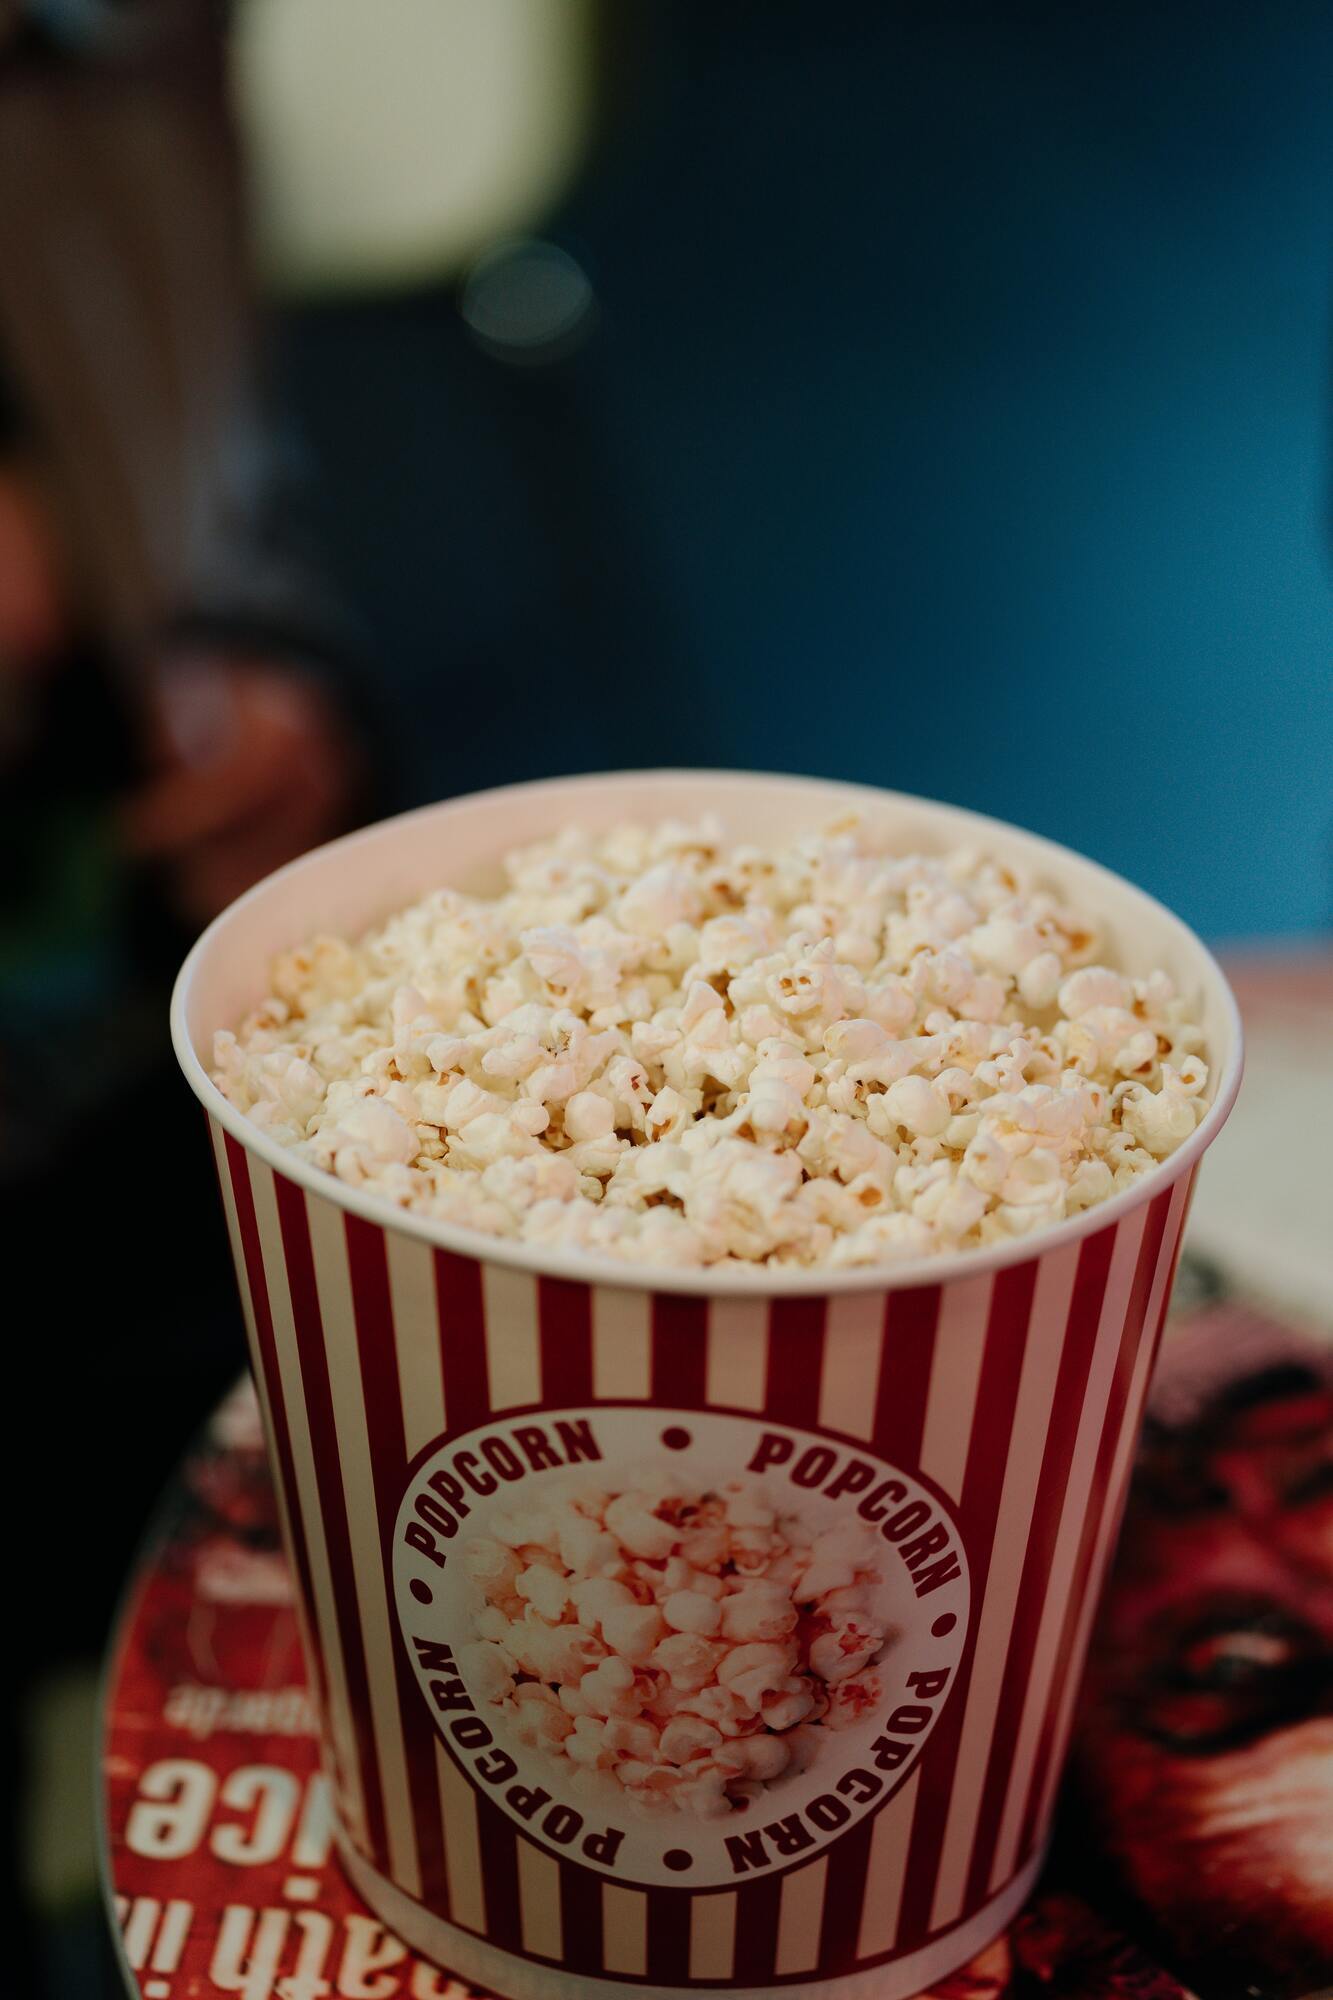 Why is popcorn dangerous